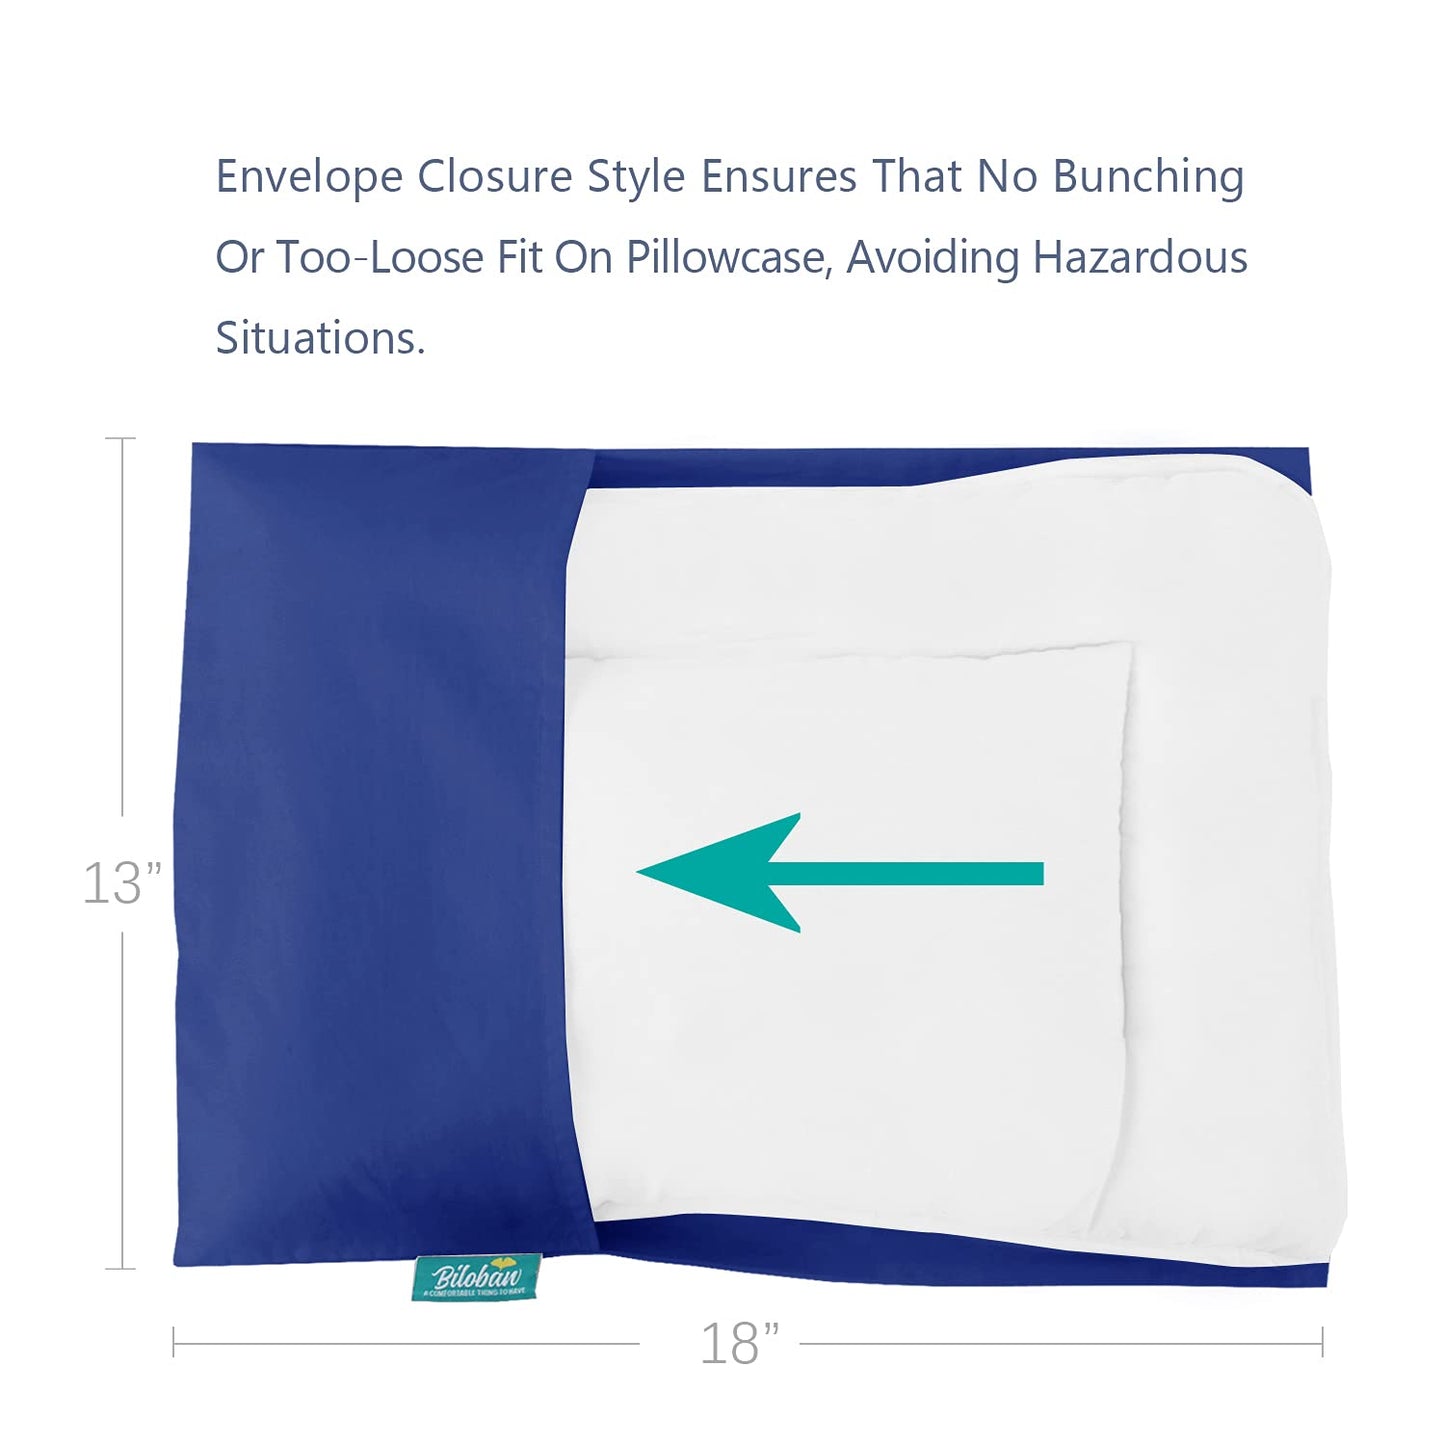 Toddler Pillow with Pillowcase-100% Cotton, Flat, Fluff, Wide, 13"x 18”, Navy